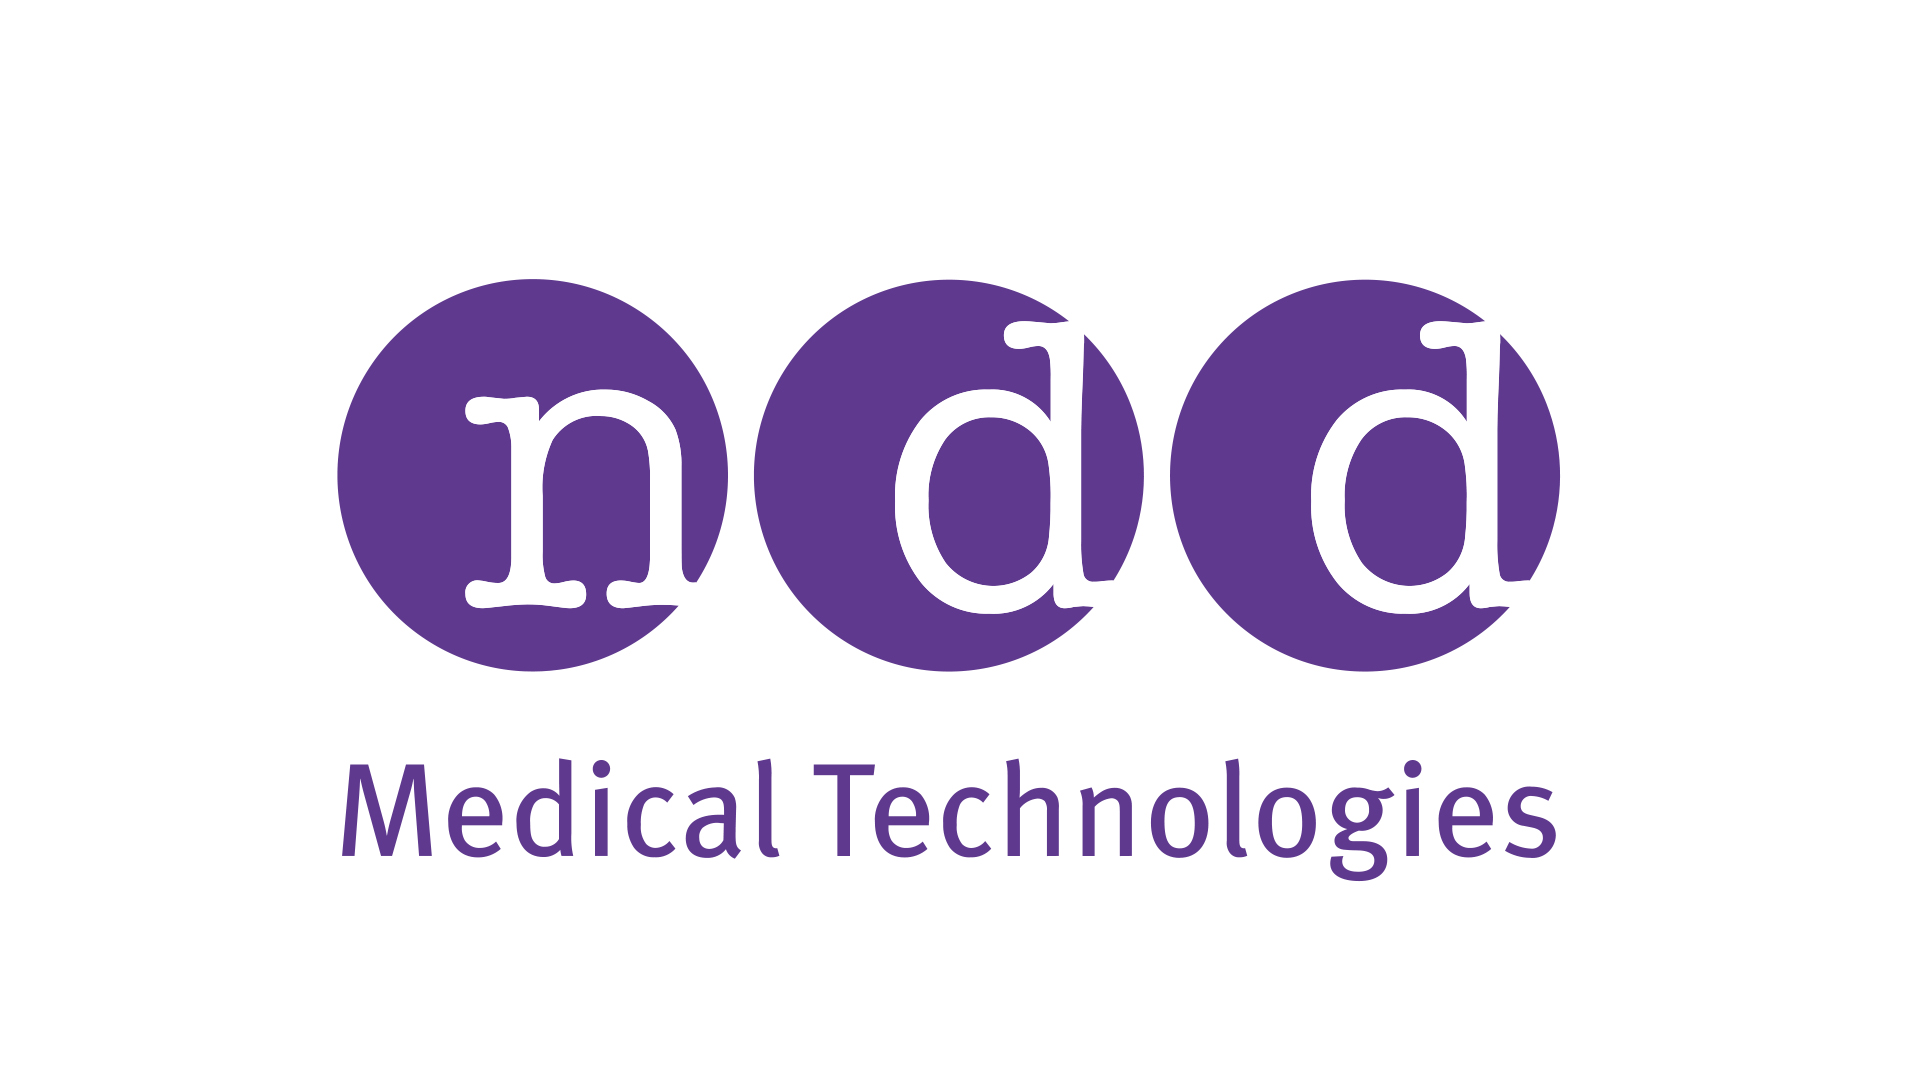 ndd Medical Technologies